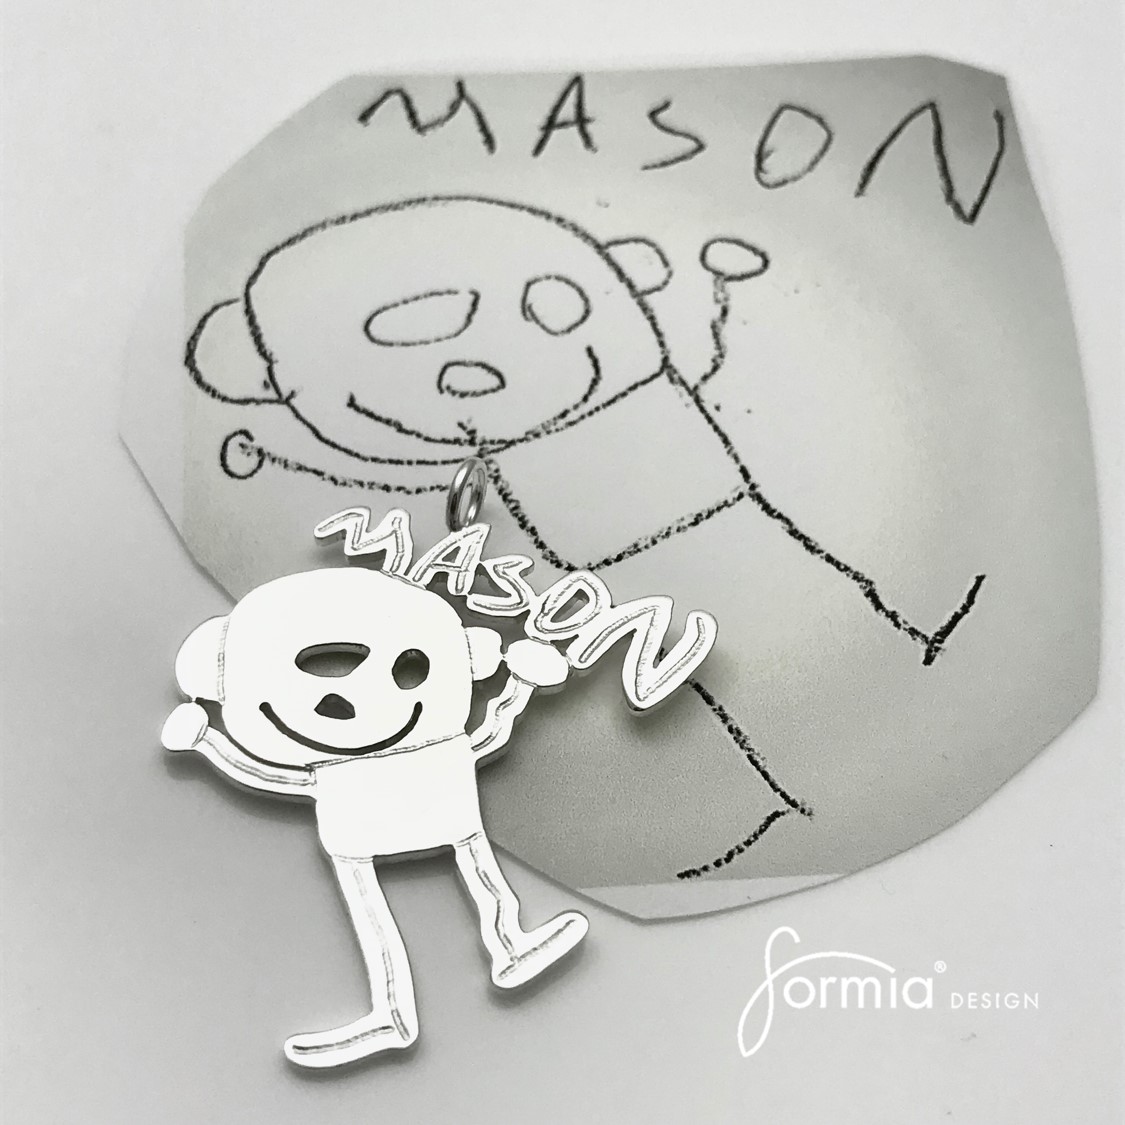 mason name portrait for design artwork pendant